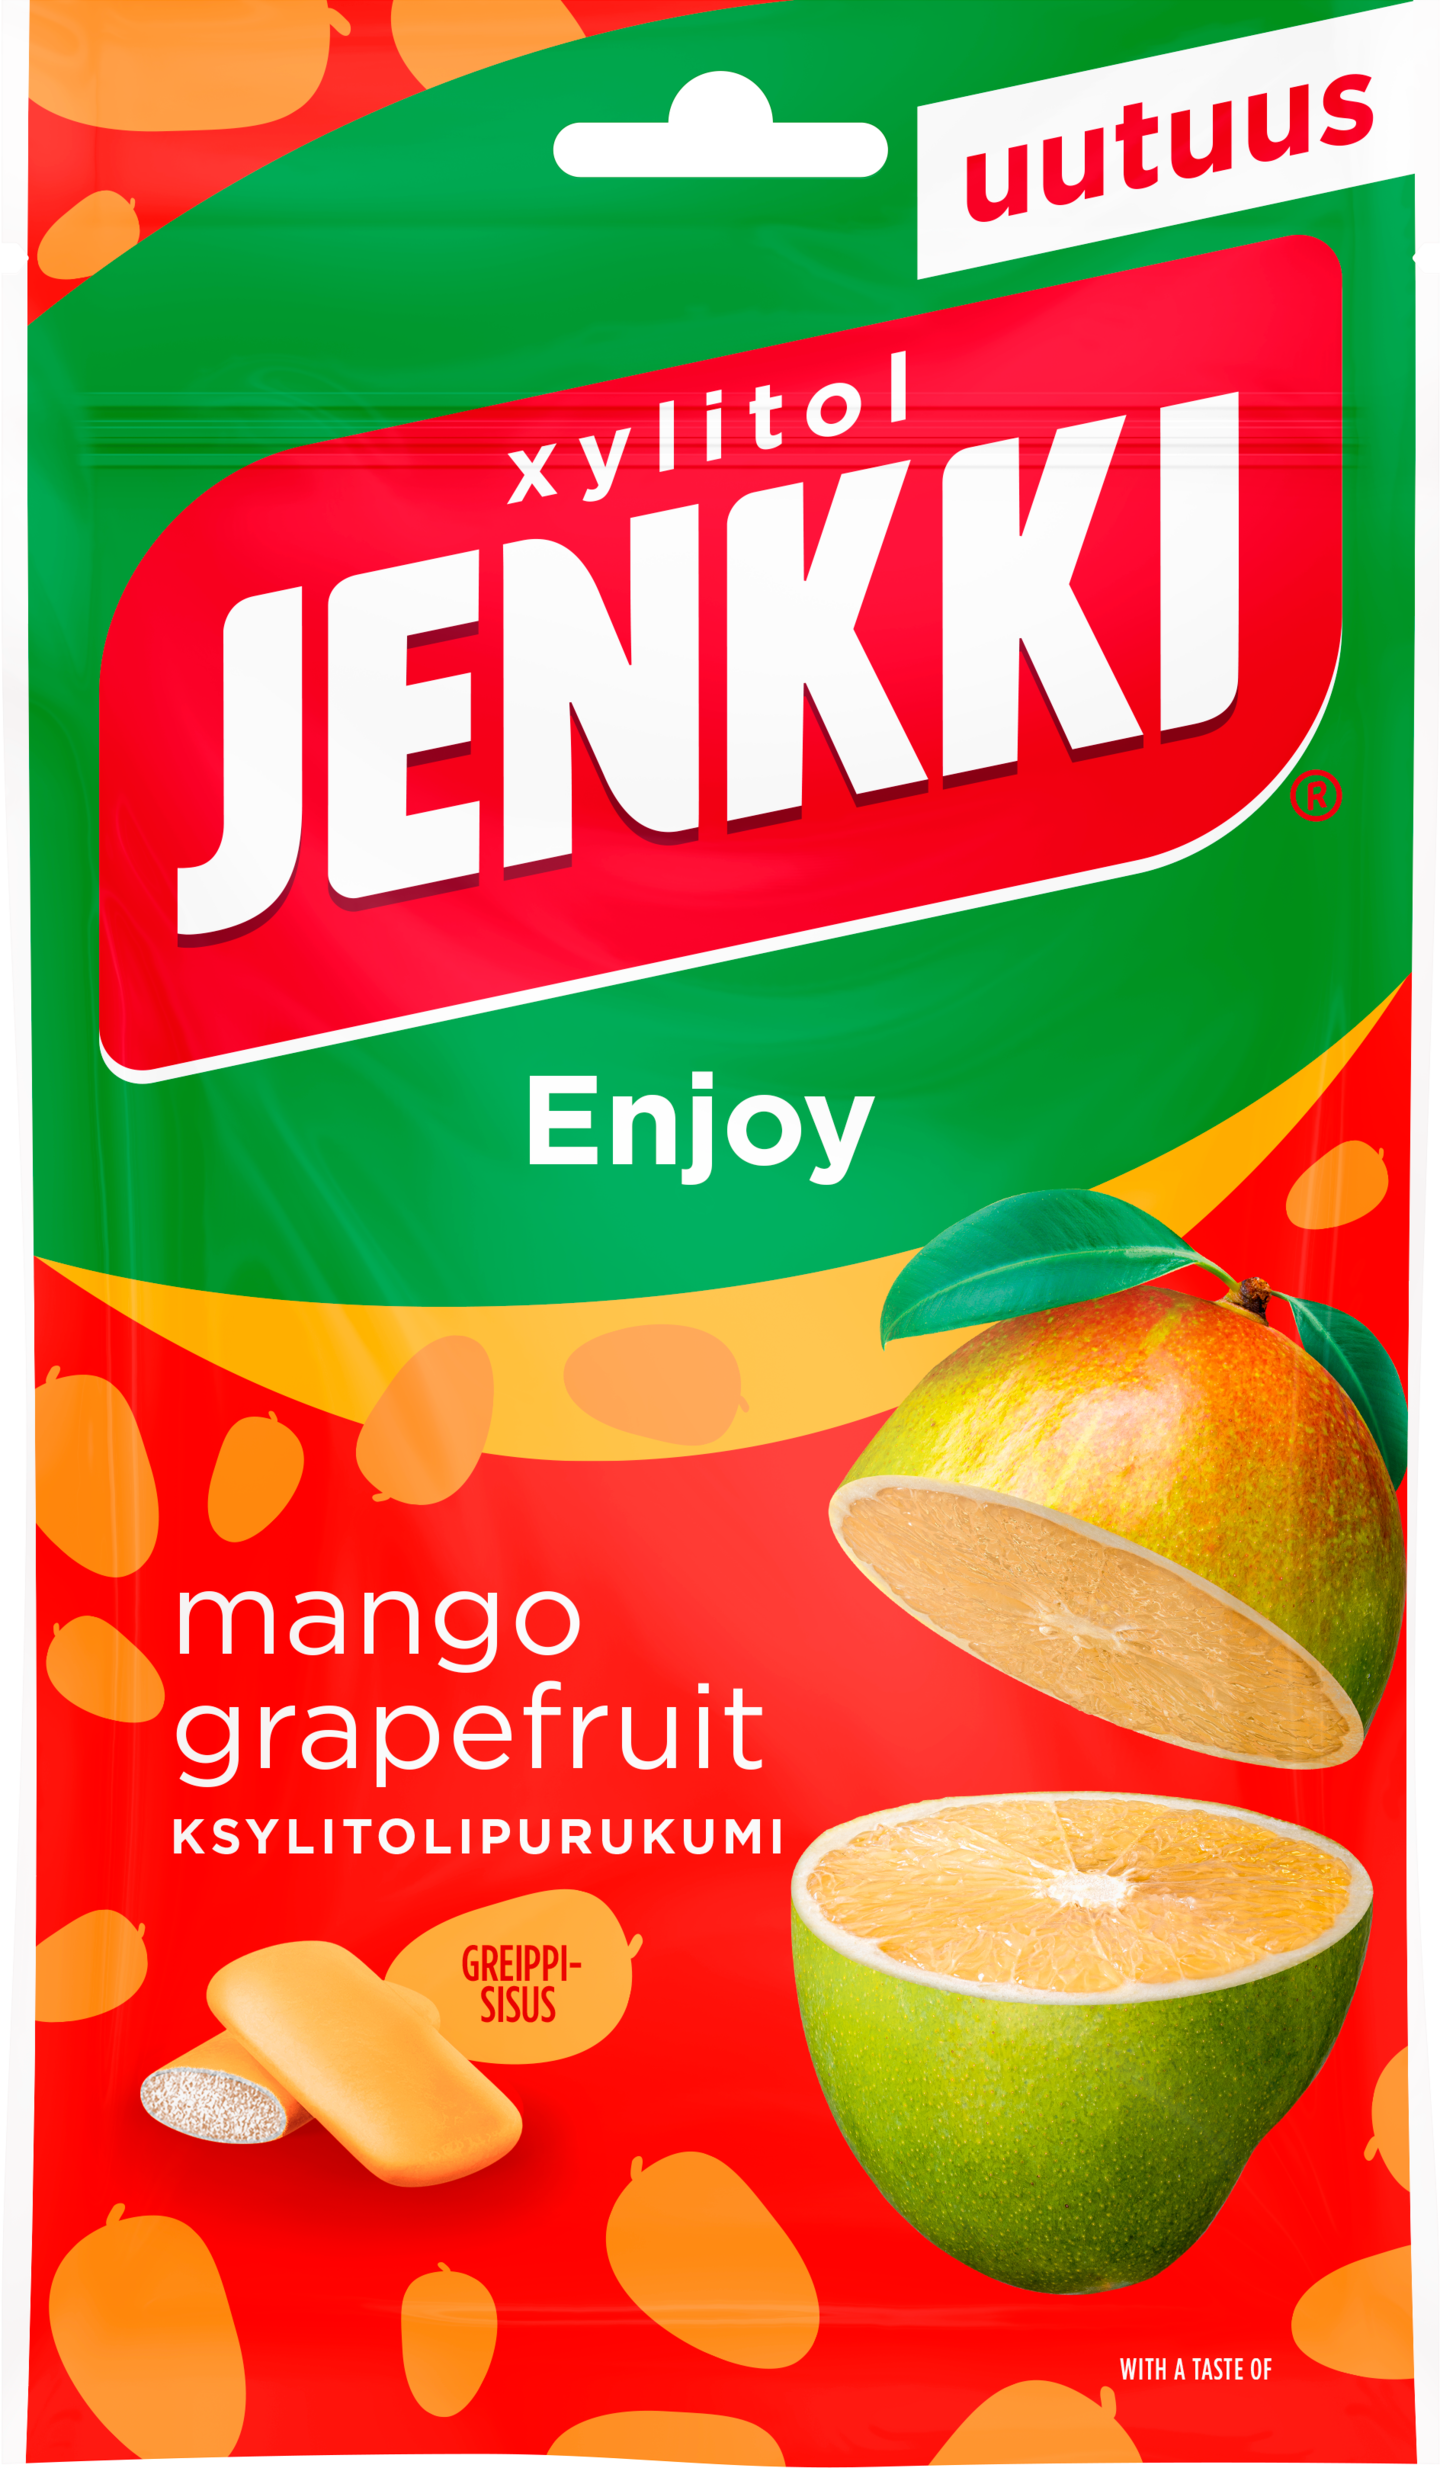 Jenkki Enjoy ksylitolipurukumi 100g mango-grapefruit